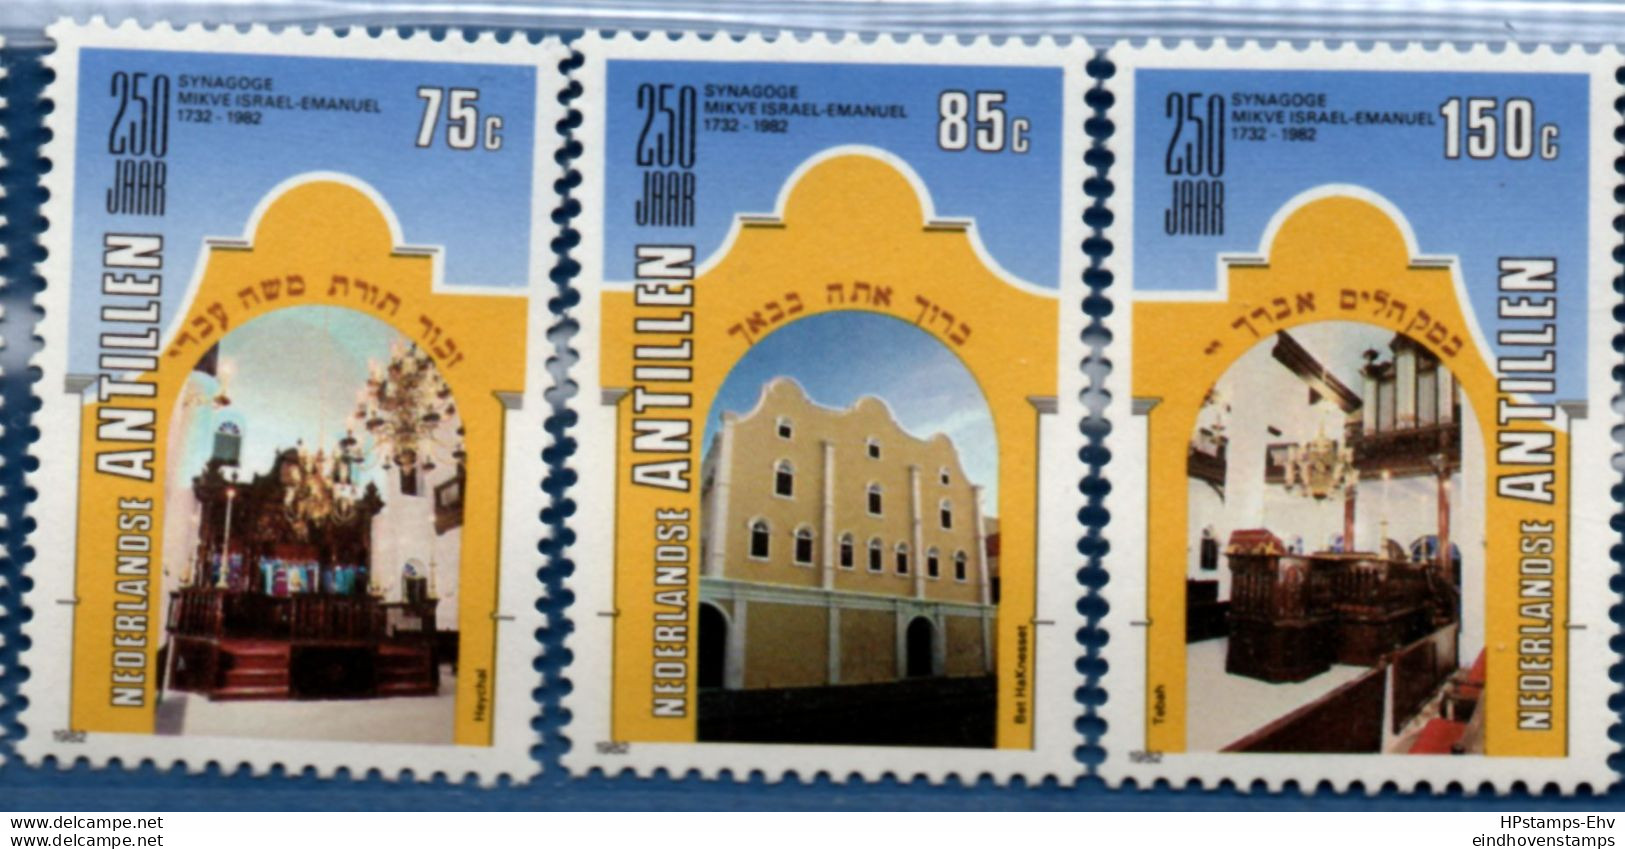 Dutch Antilles 1982 Mikve Israel-Emanuel Synagogue 3 Values MNH 2202.1521 Nederlandse Antillen - Judaika, Judentum